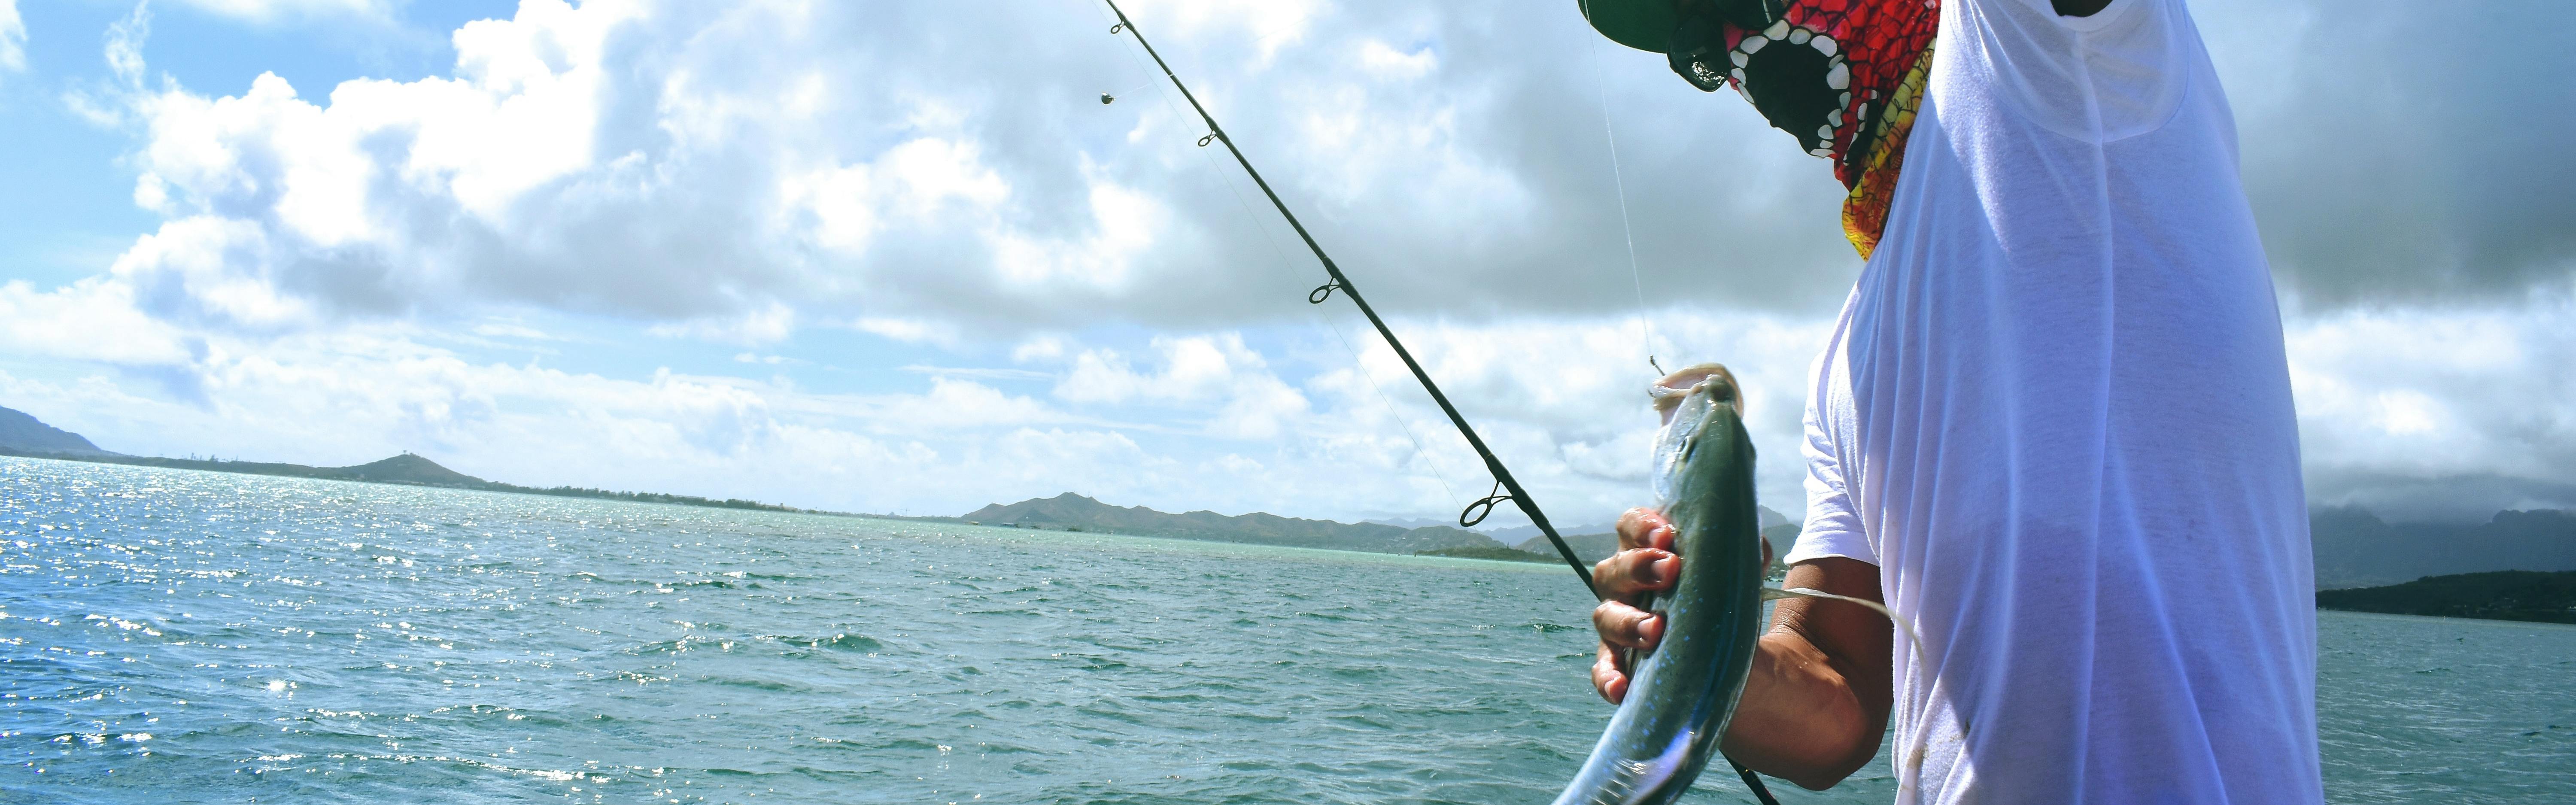 10 Pockets Fishing Tackle Binder Fly Fishing Leader Tippet Line